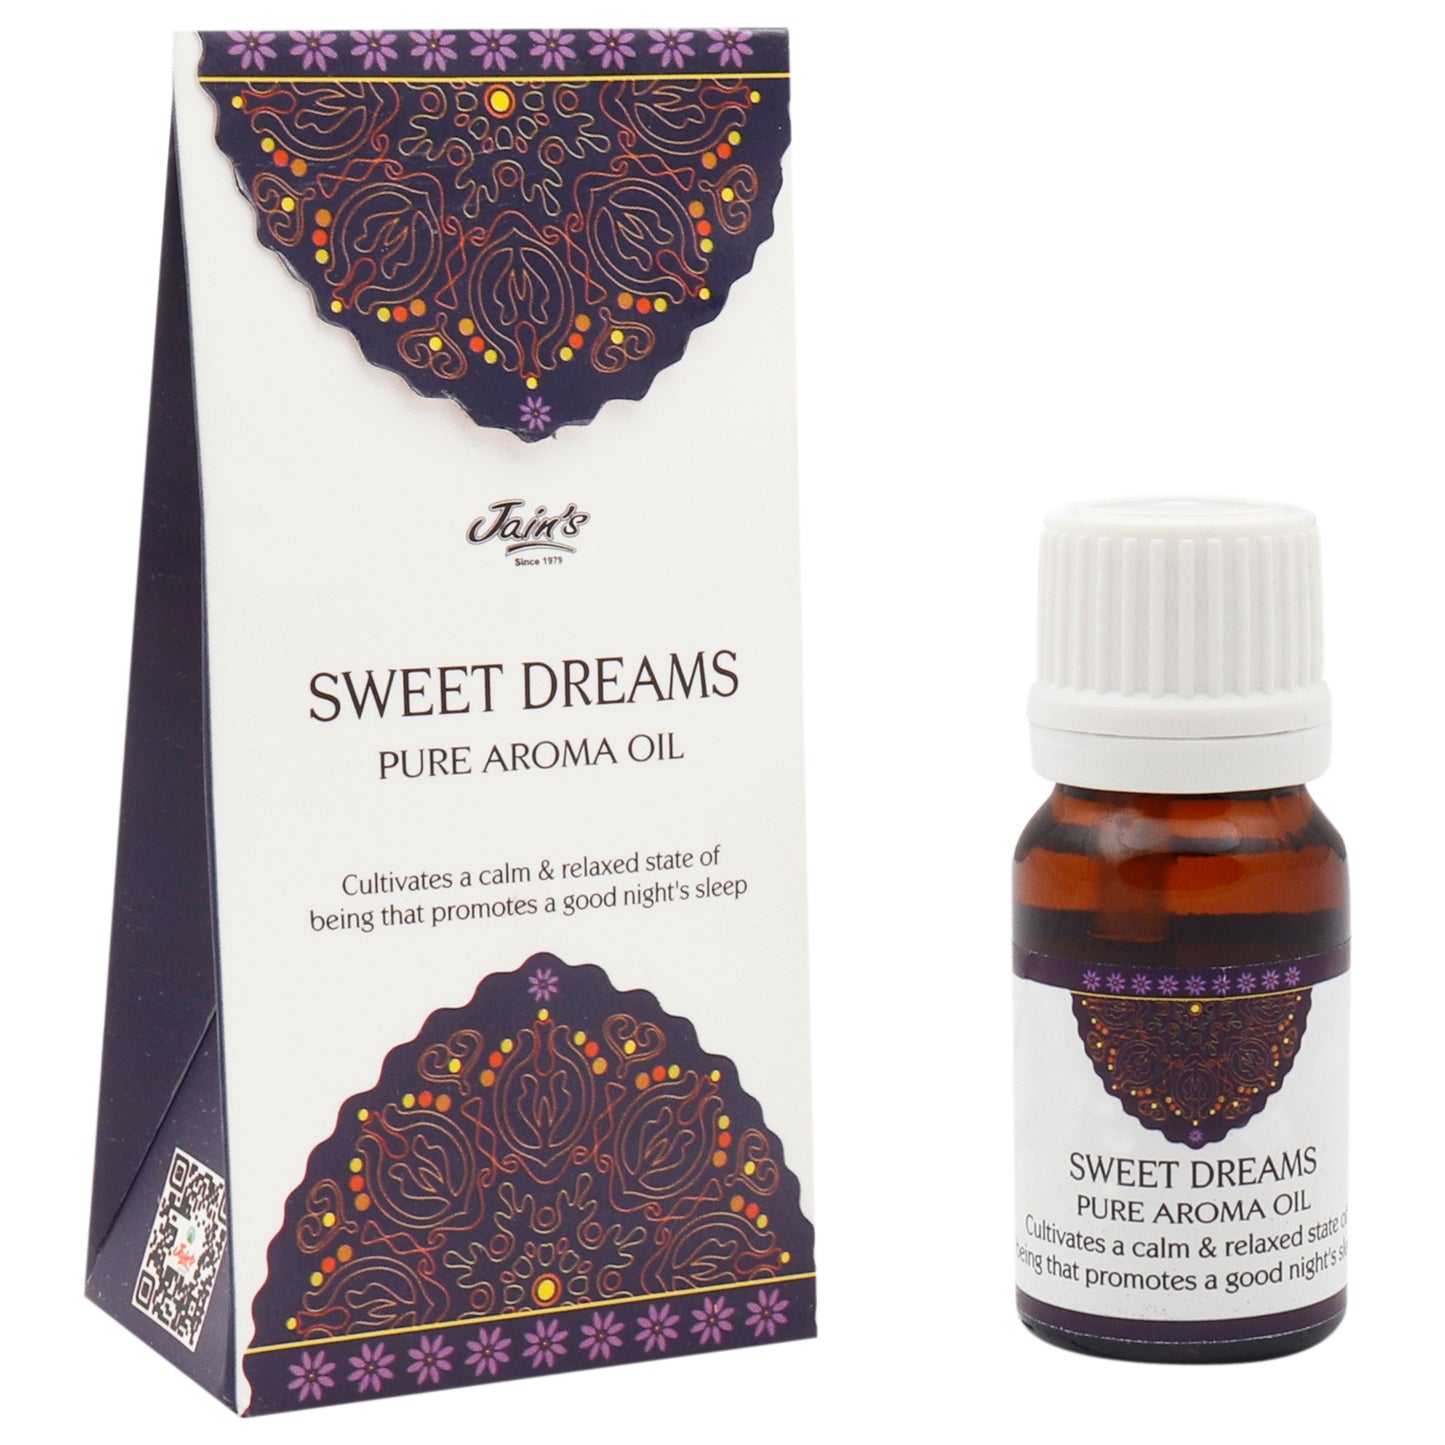 Sweet Dreams Aroma Oil / Diffuser Oil